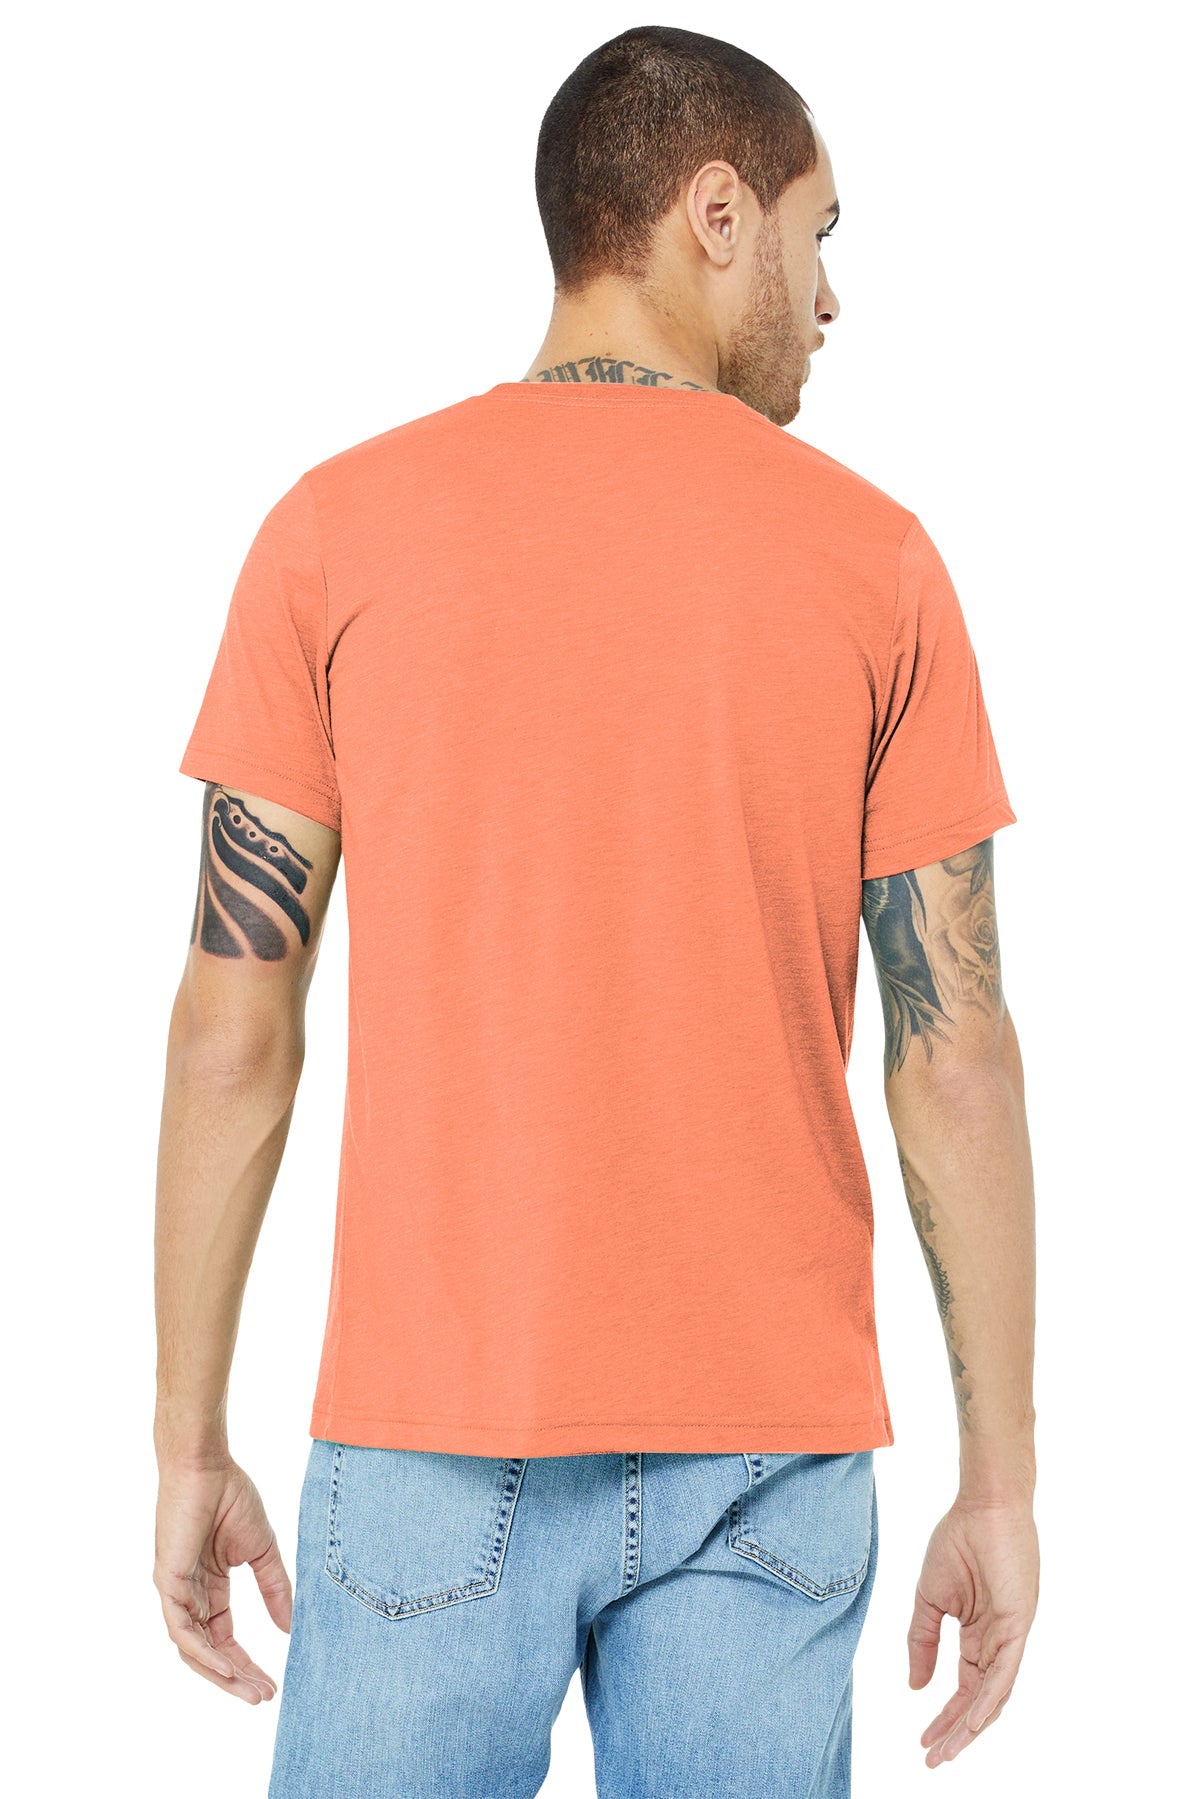 bella + canvas unisex triblend short sleeve t-shirt 3413c orange triblend